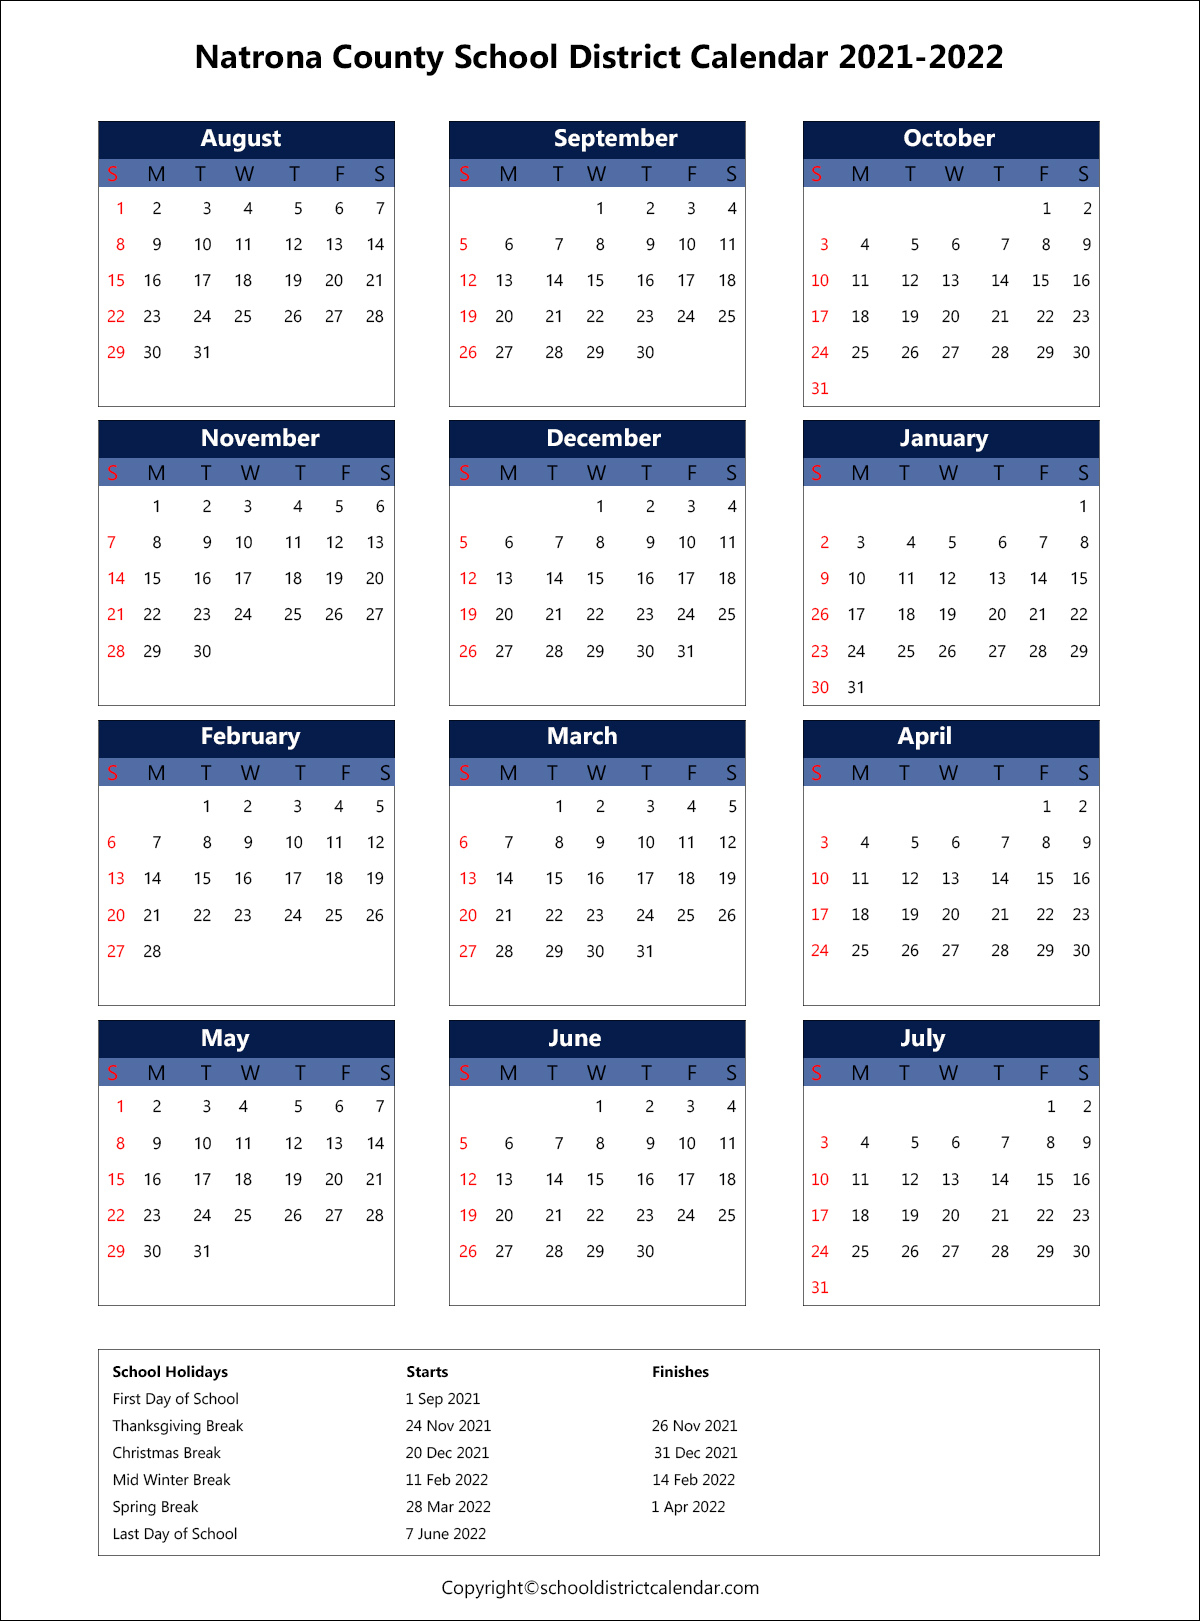 Natrona County School District Calendar Holidays 2021 2022